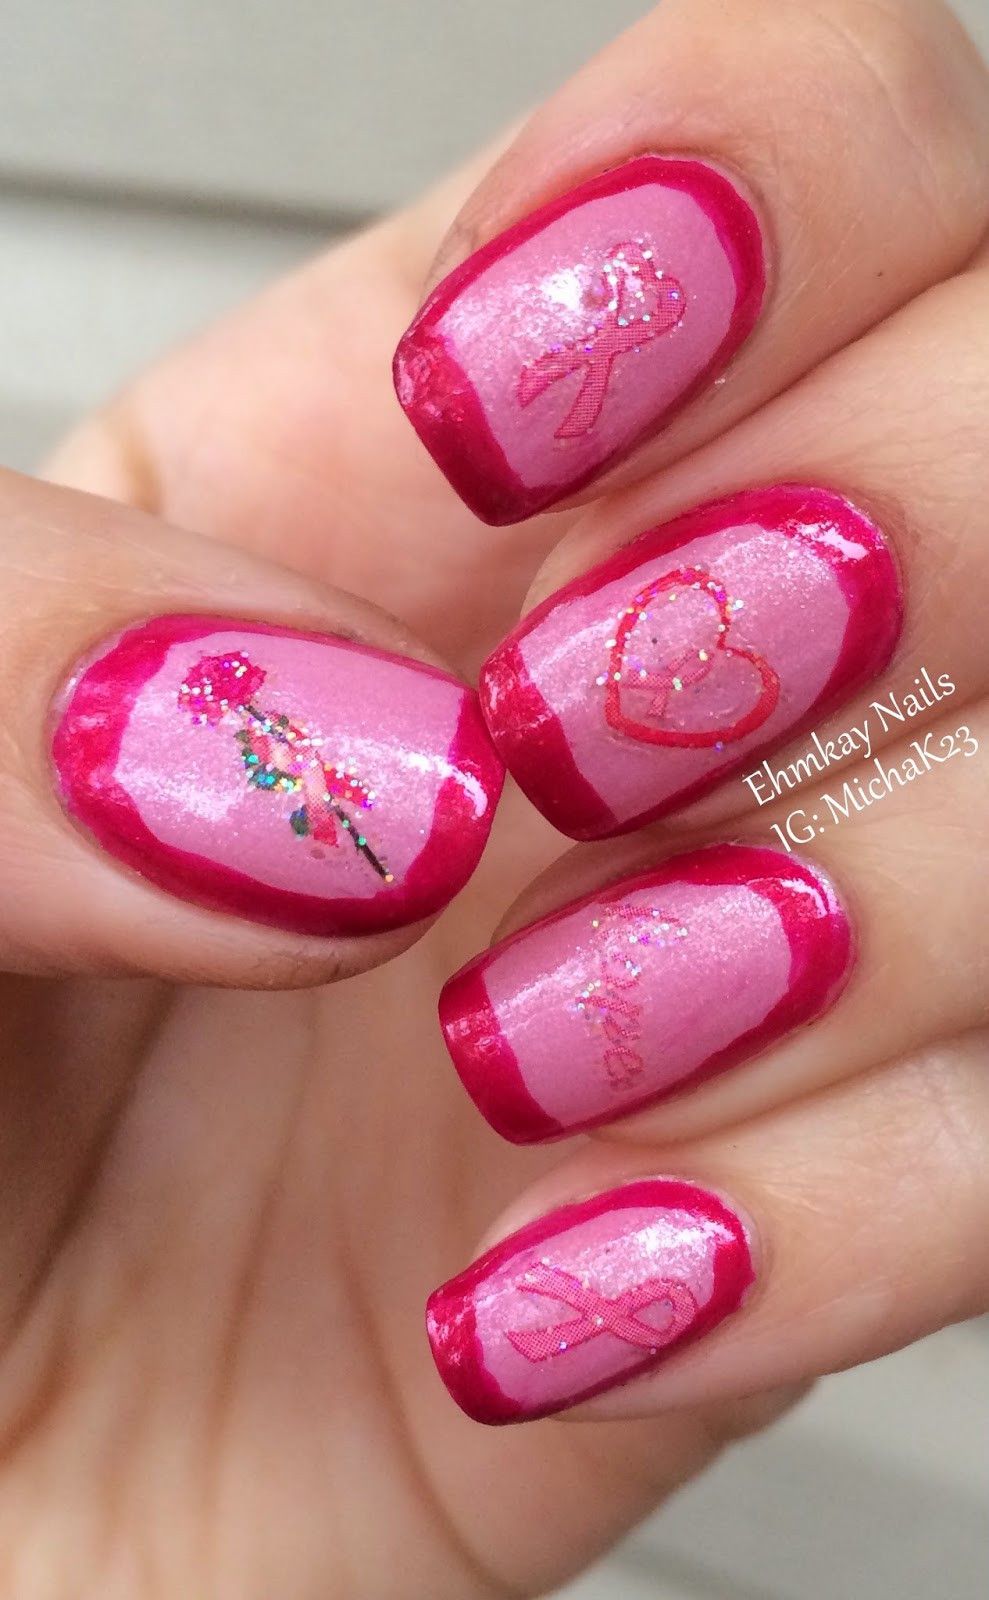 Breast Cancer Awareness Nail Designs
 ehmkay nails Breast Cancer Awareness Nail Art with Joby